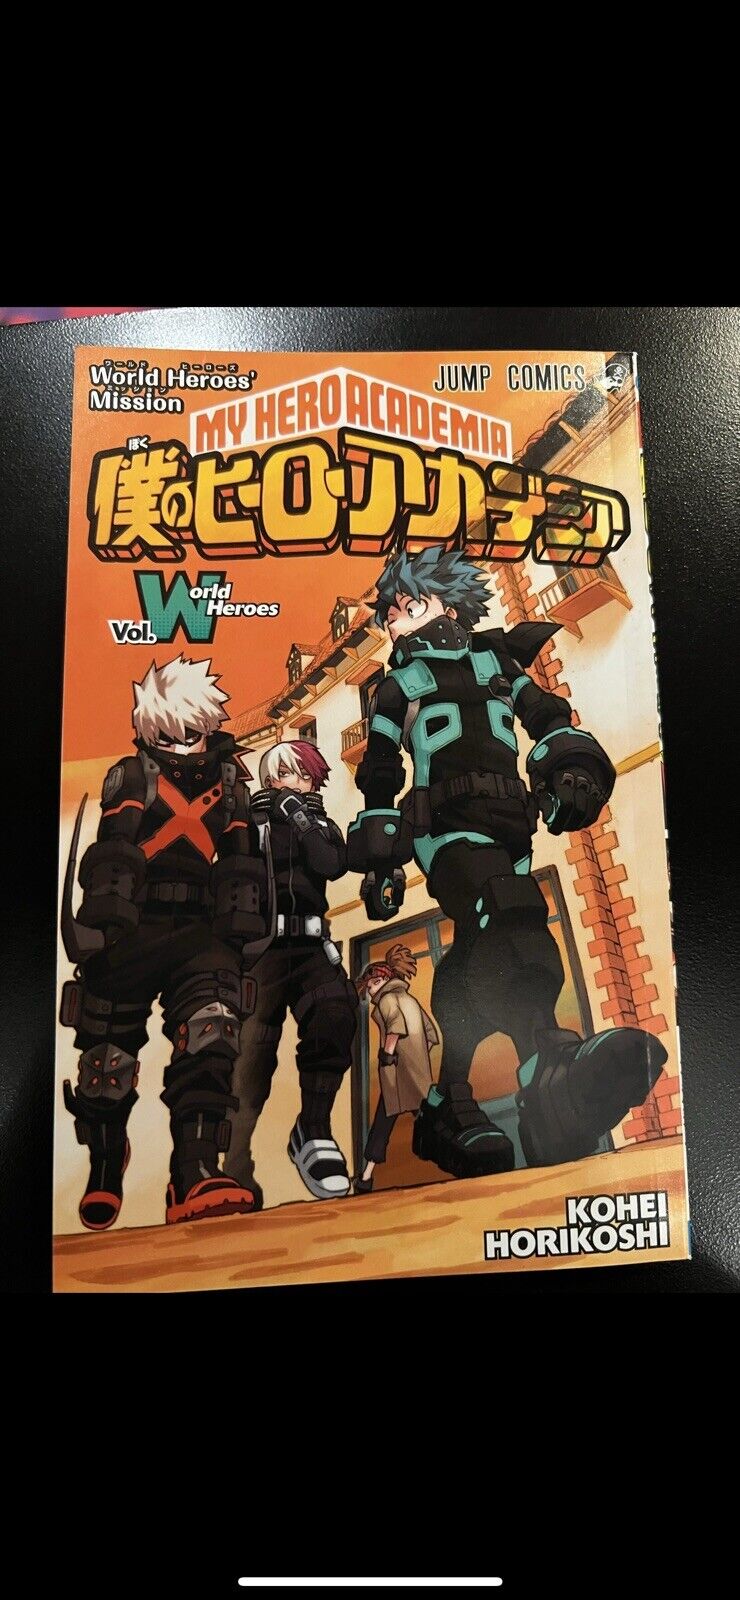 My Hero Academia Vol. World Heroes Mission The Movie Manga Comic Book US Version